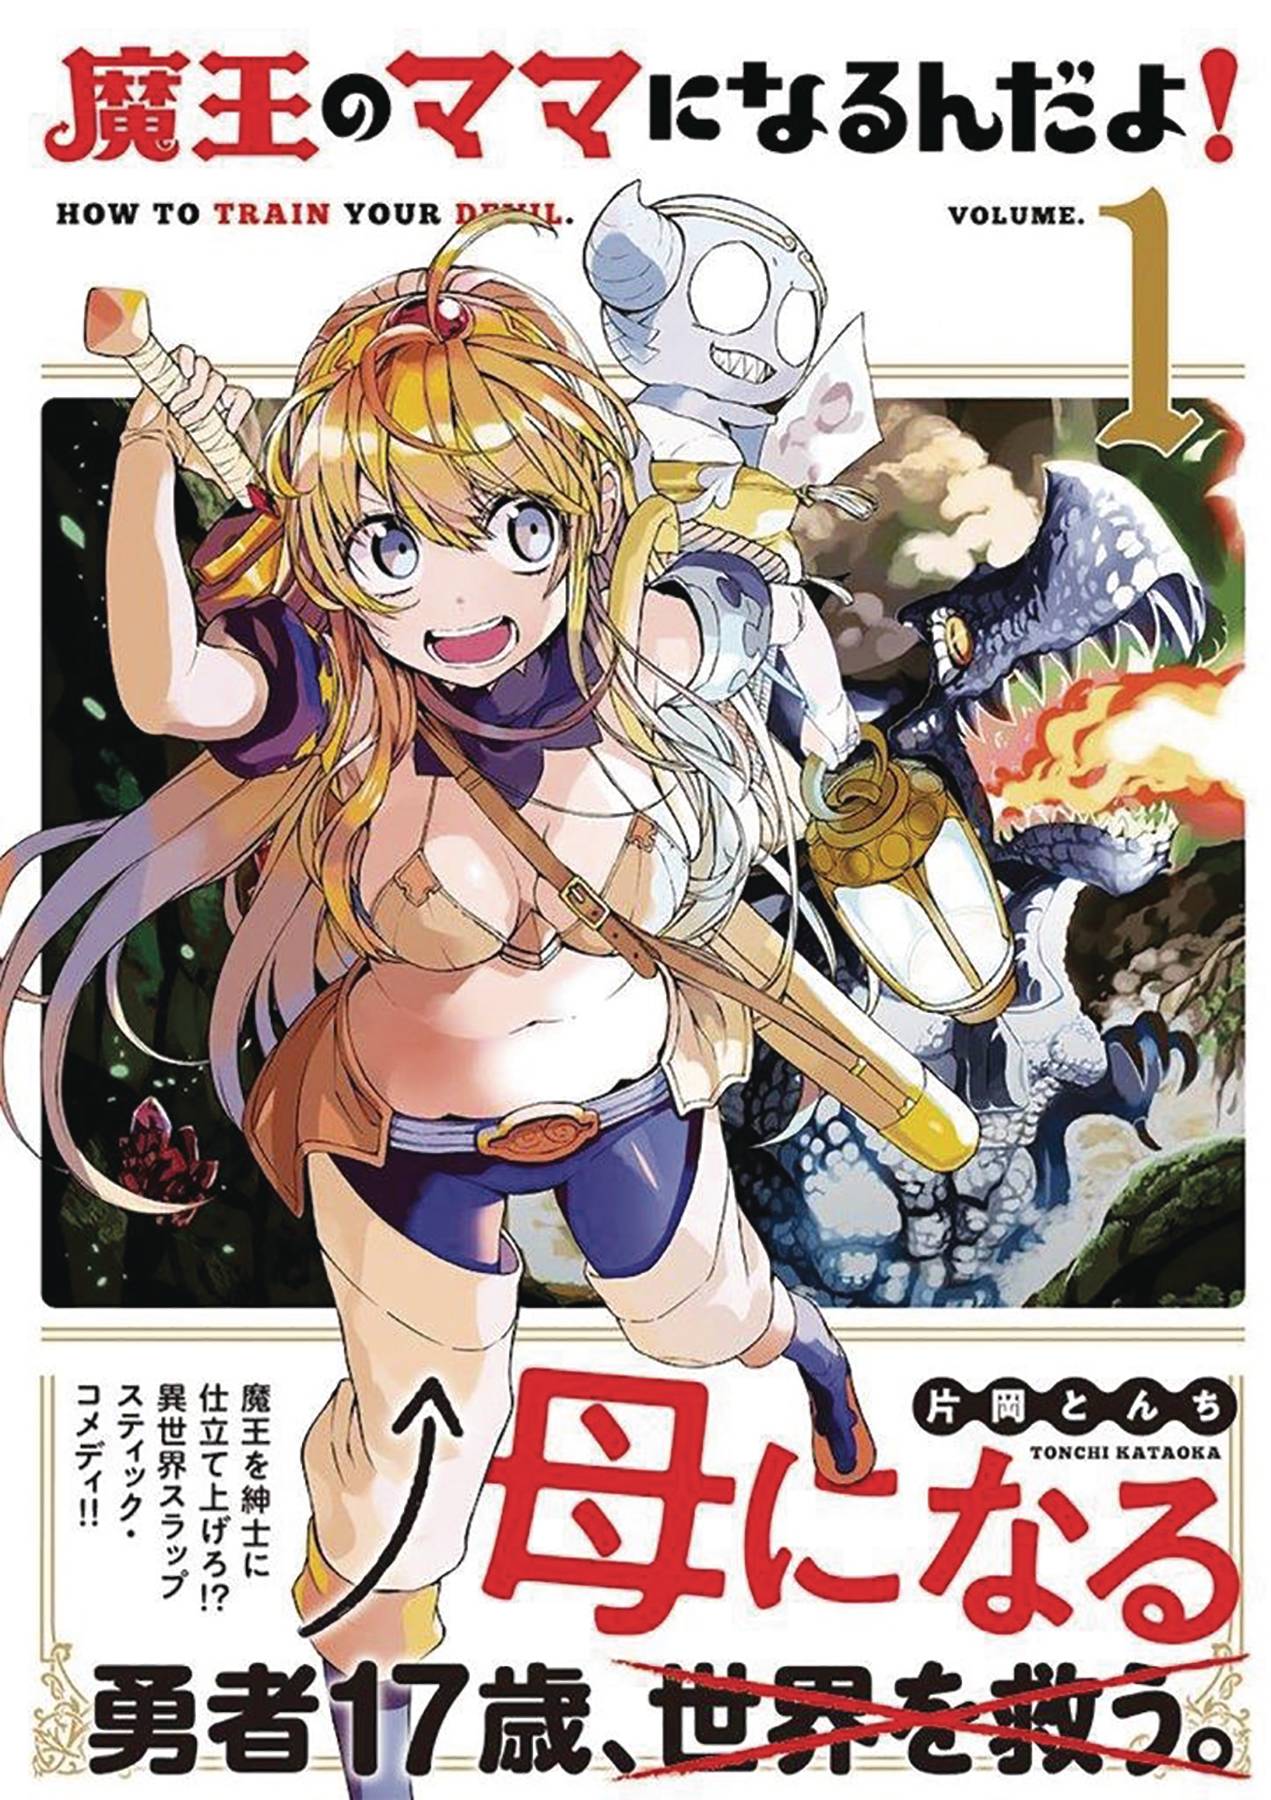 How To Train Your Devil Manga Volume 1